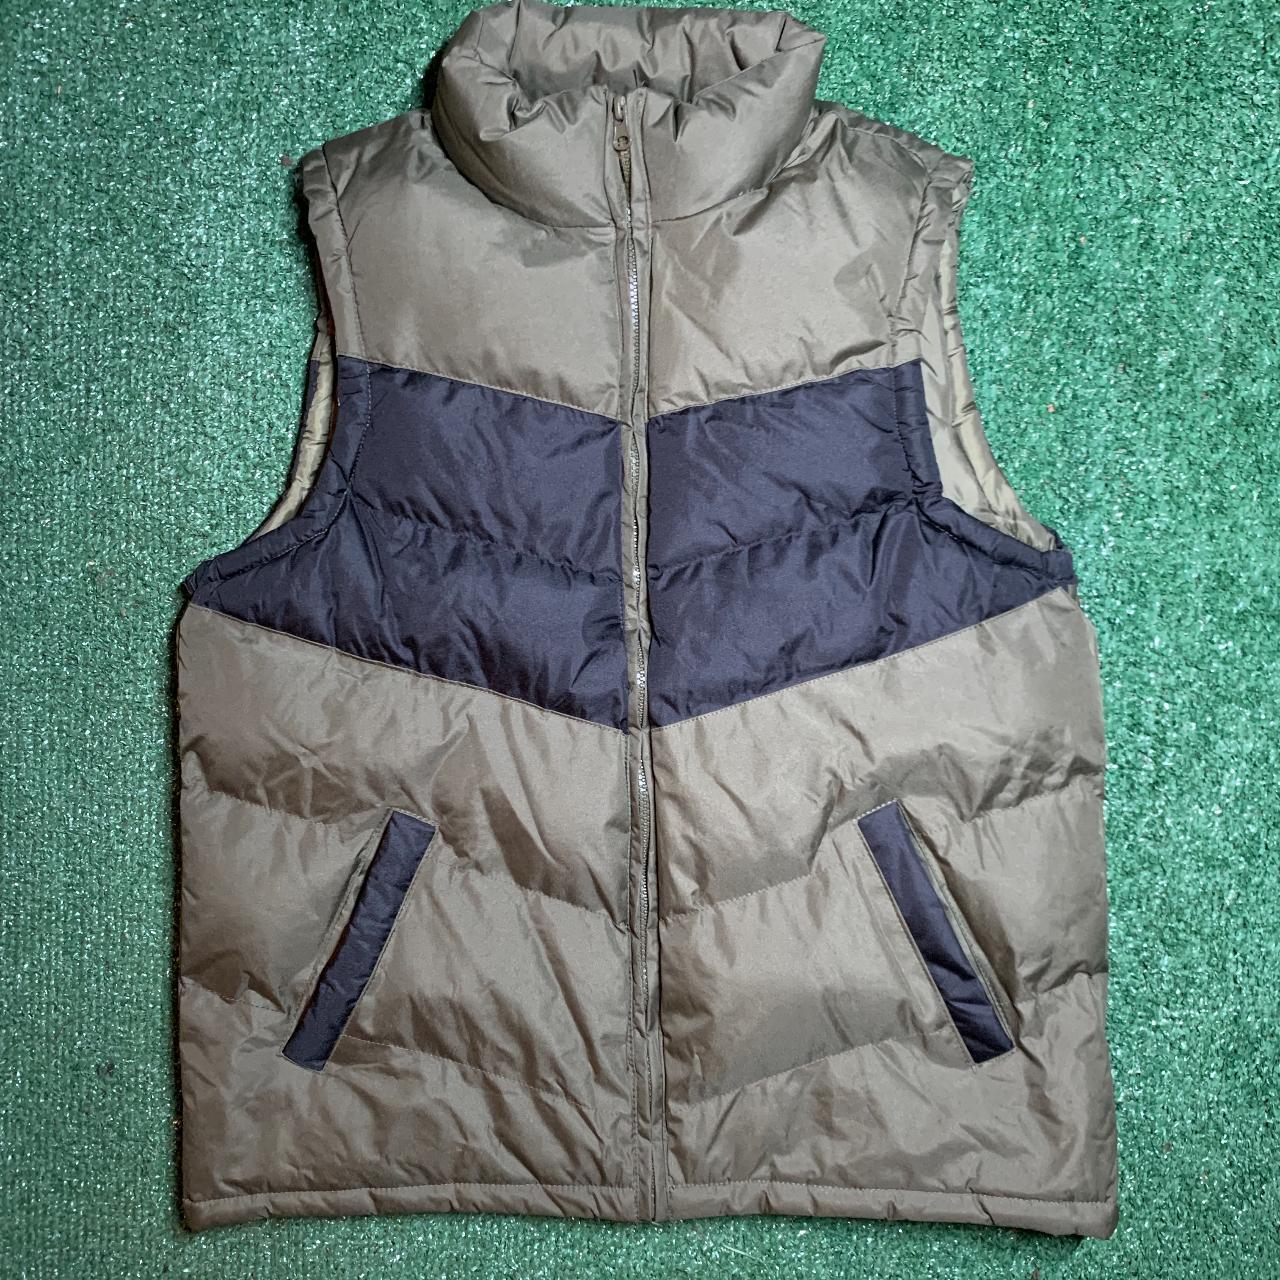 Cambridge Classic Puffer Vest Size M - Depop